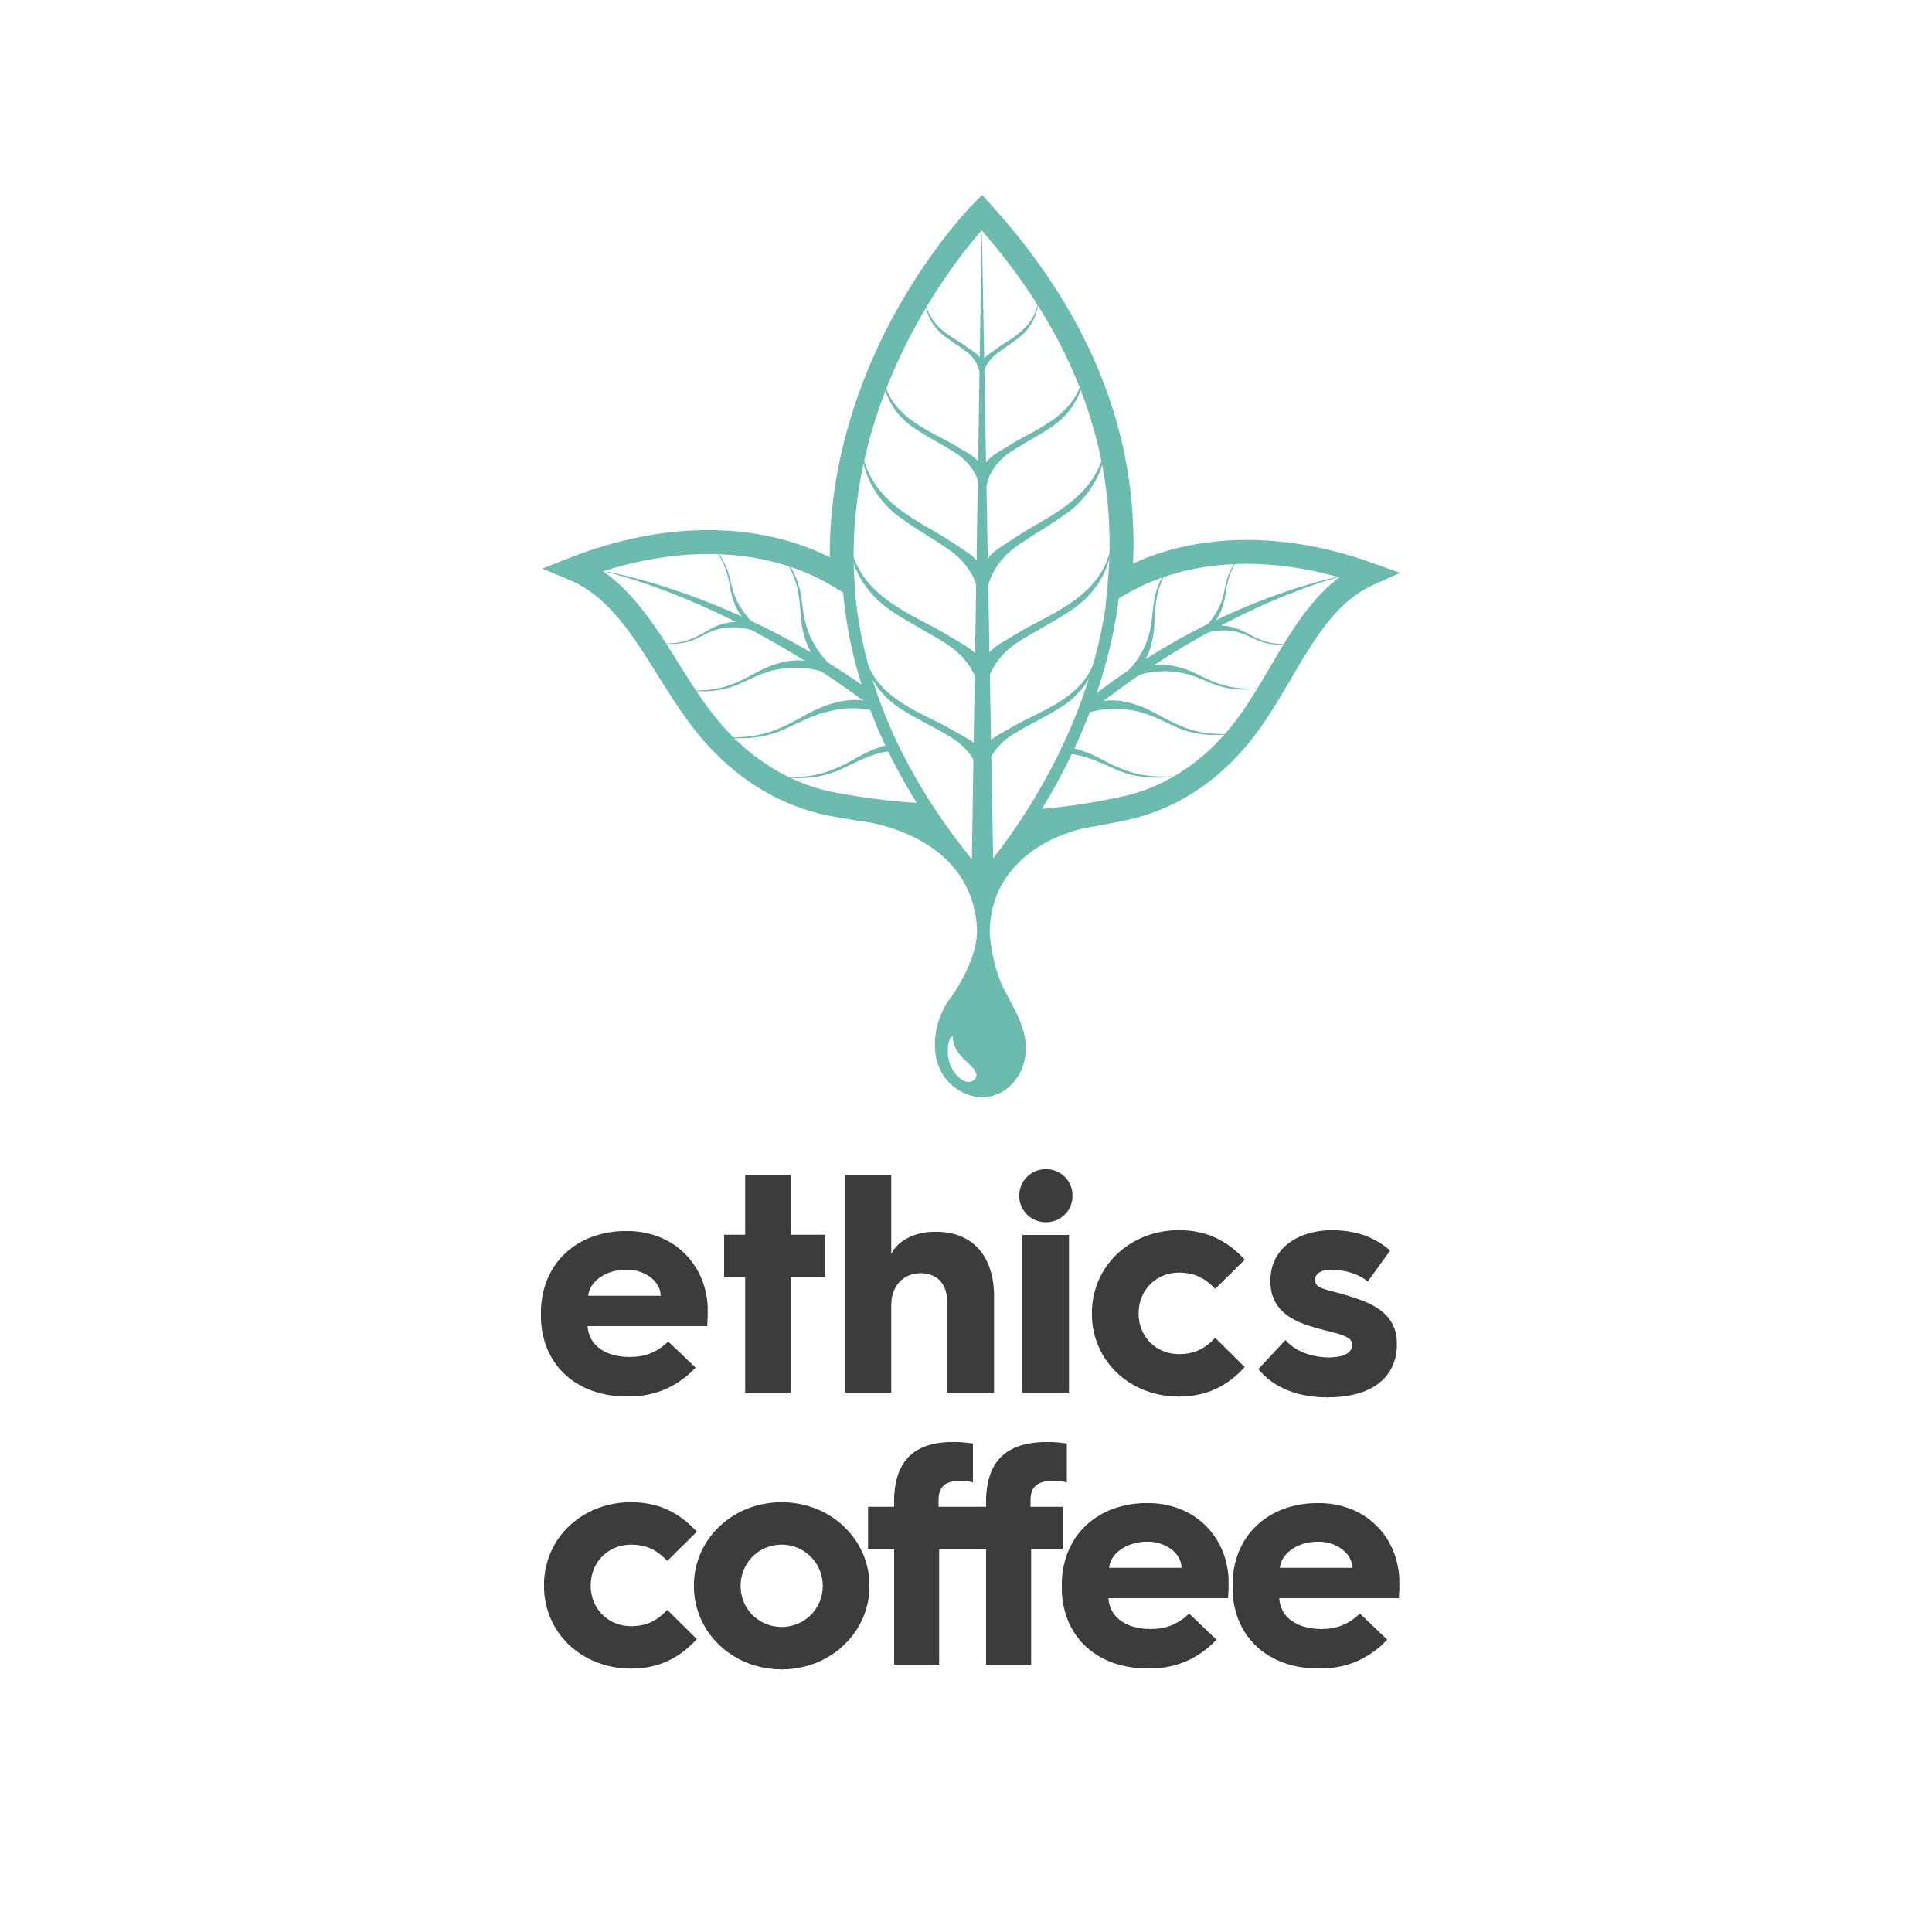 Ethics coffee